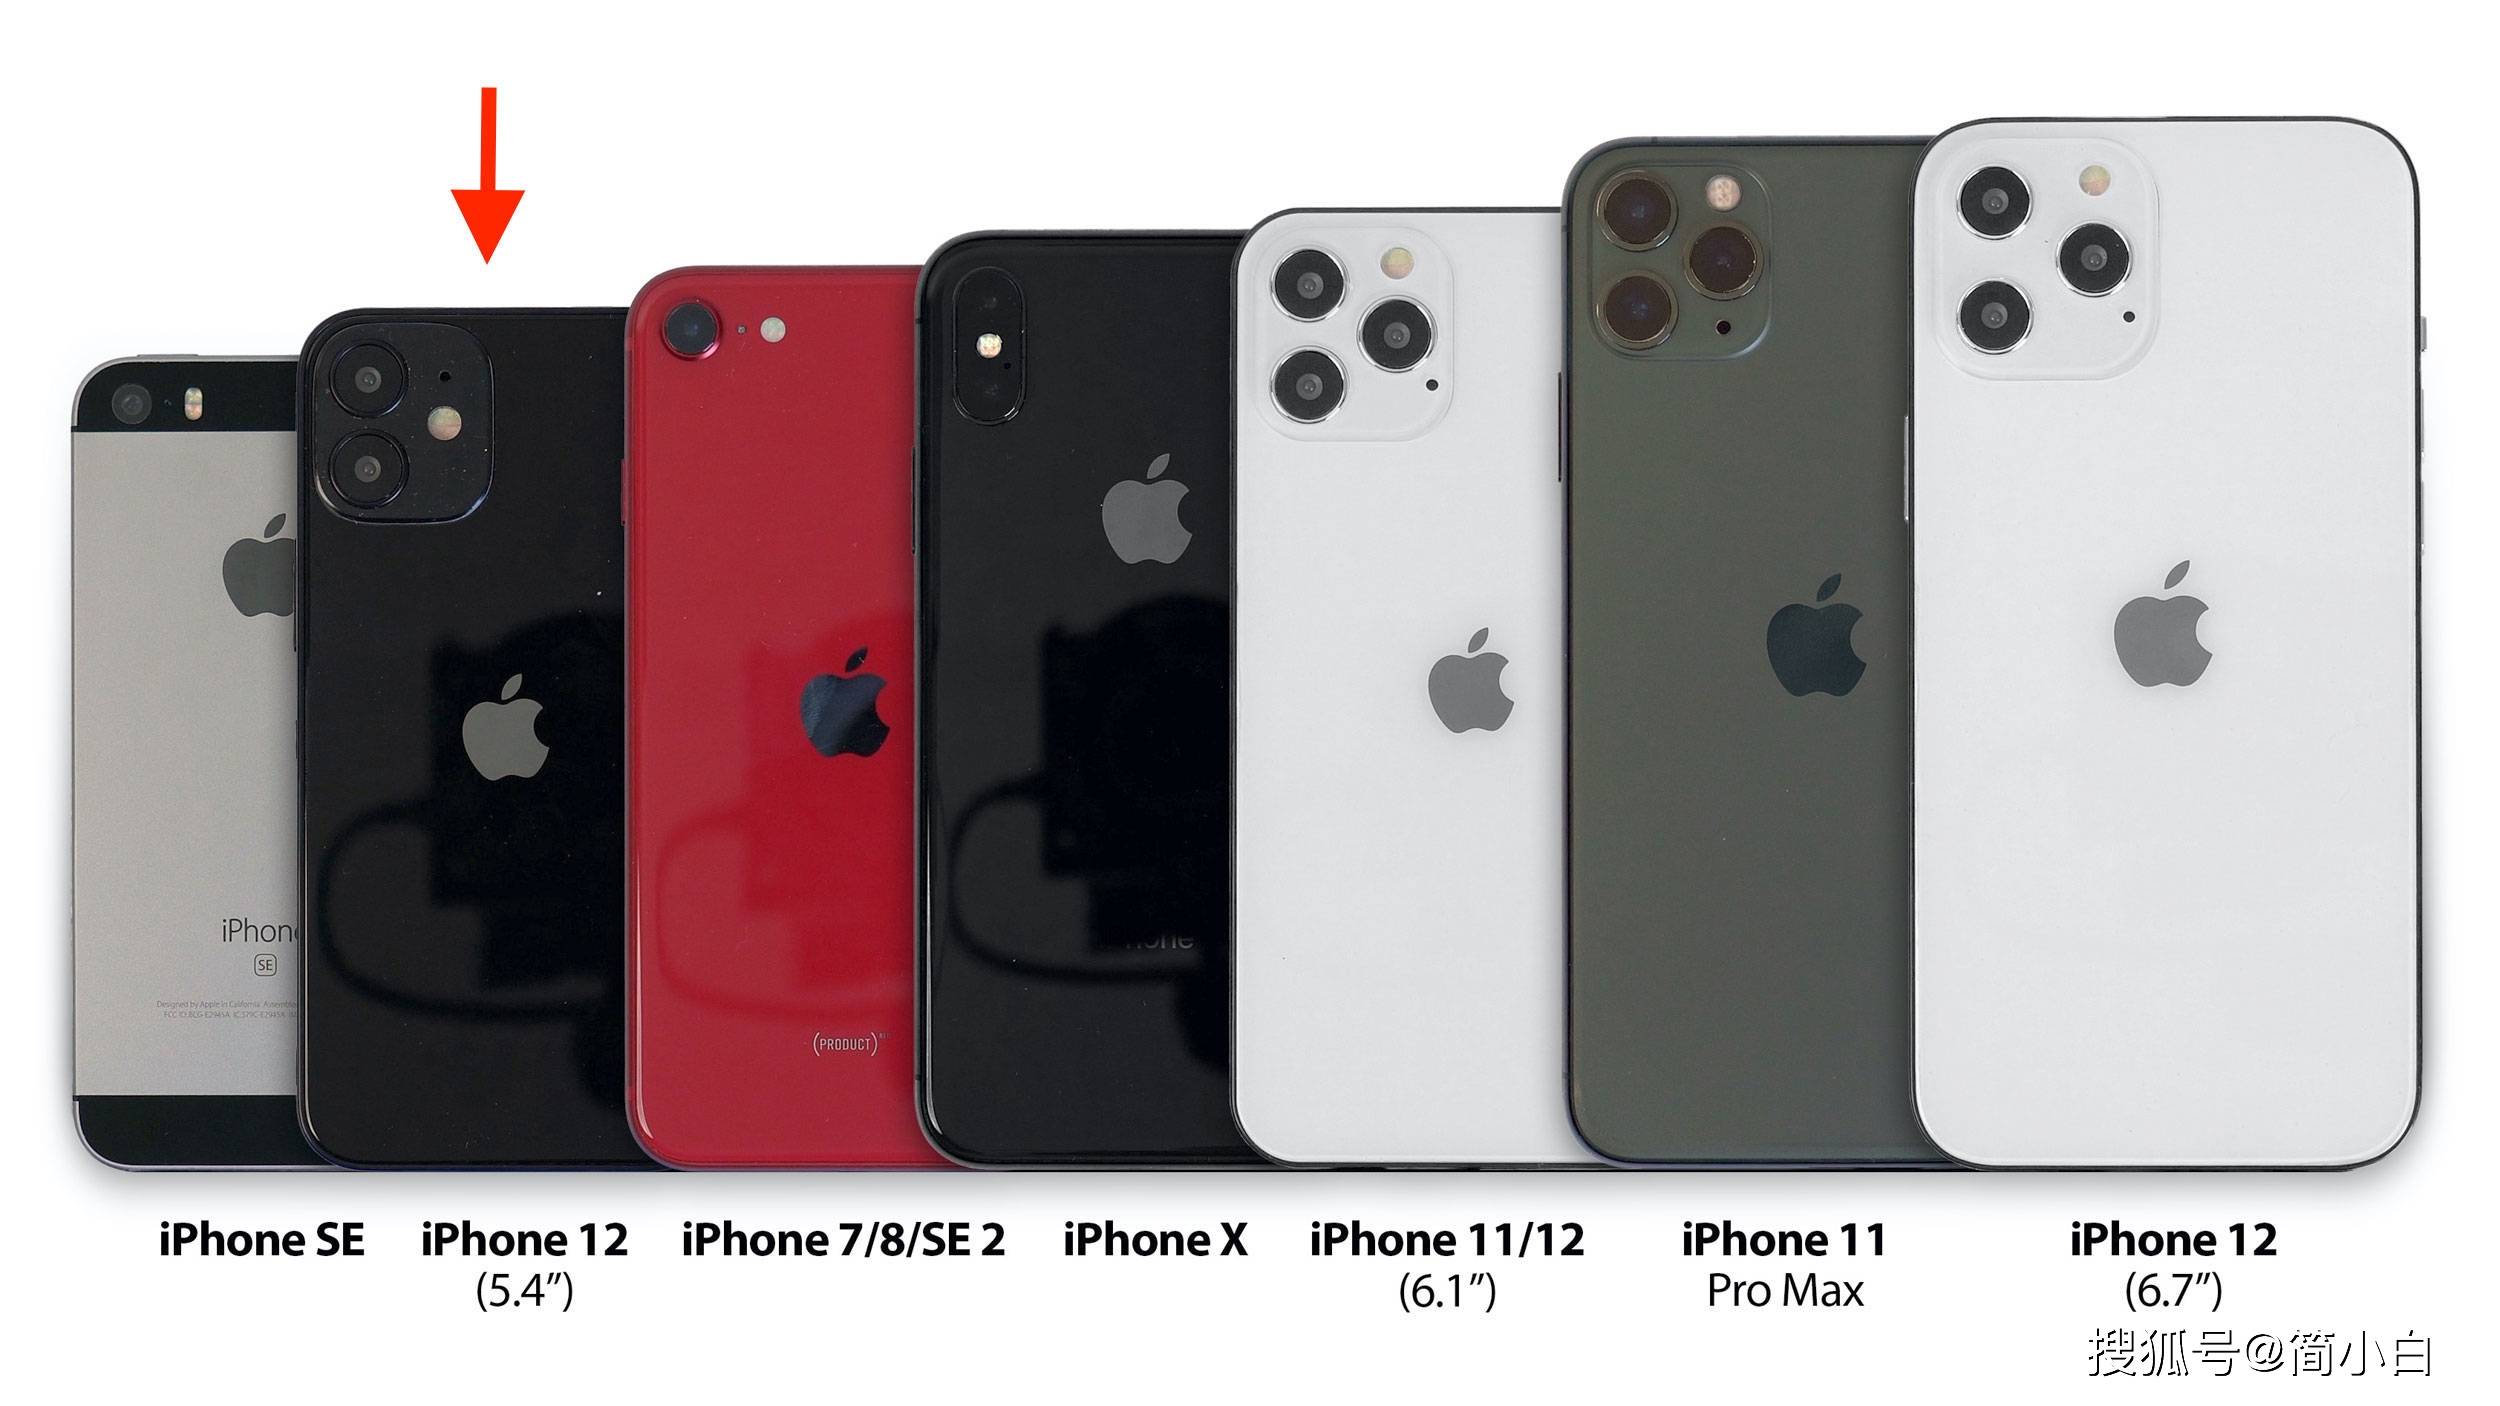 iphone 12全系列预测!新增超小尺寸iphone 12 mini